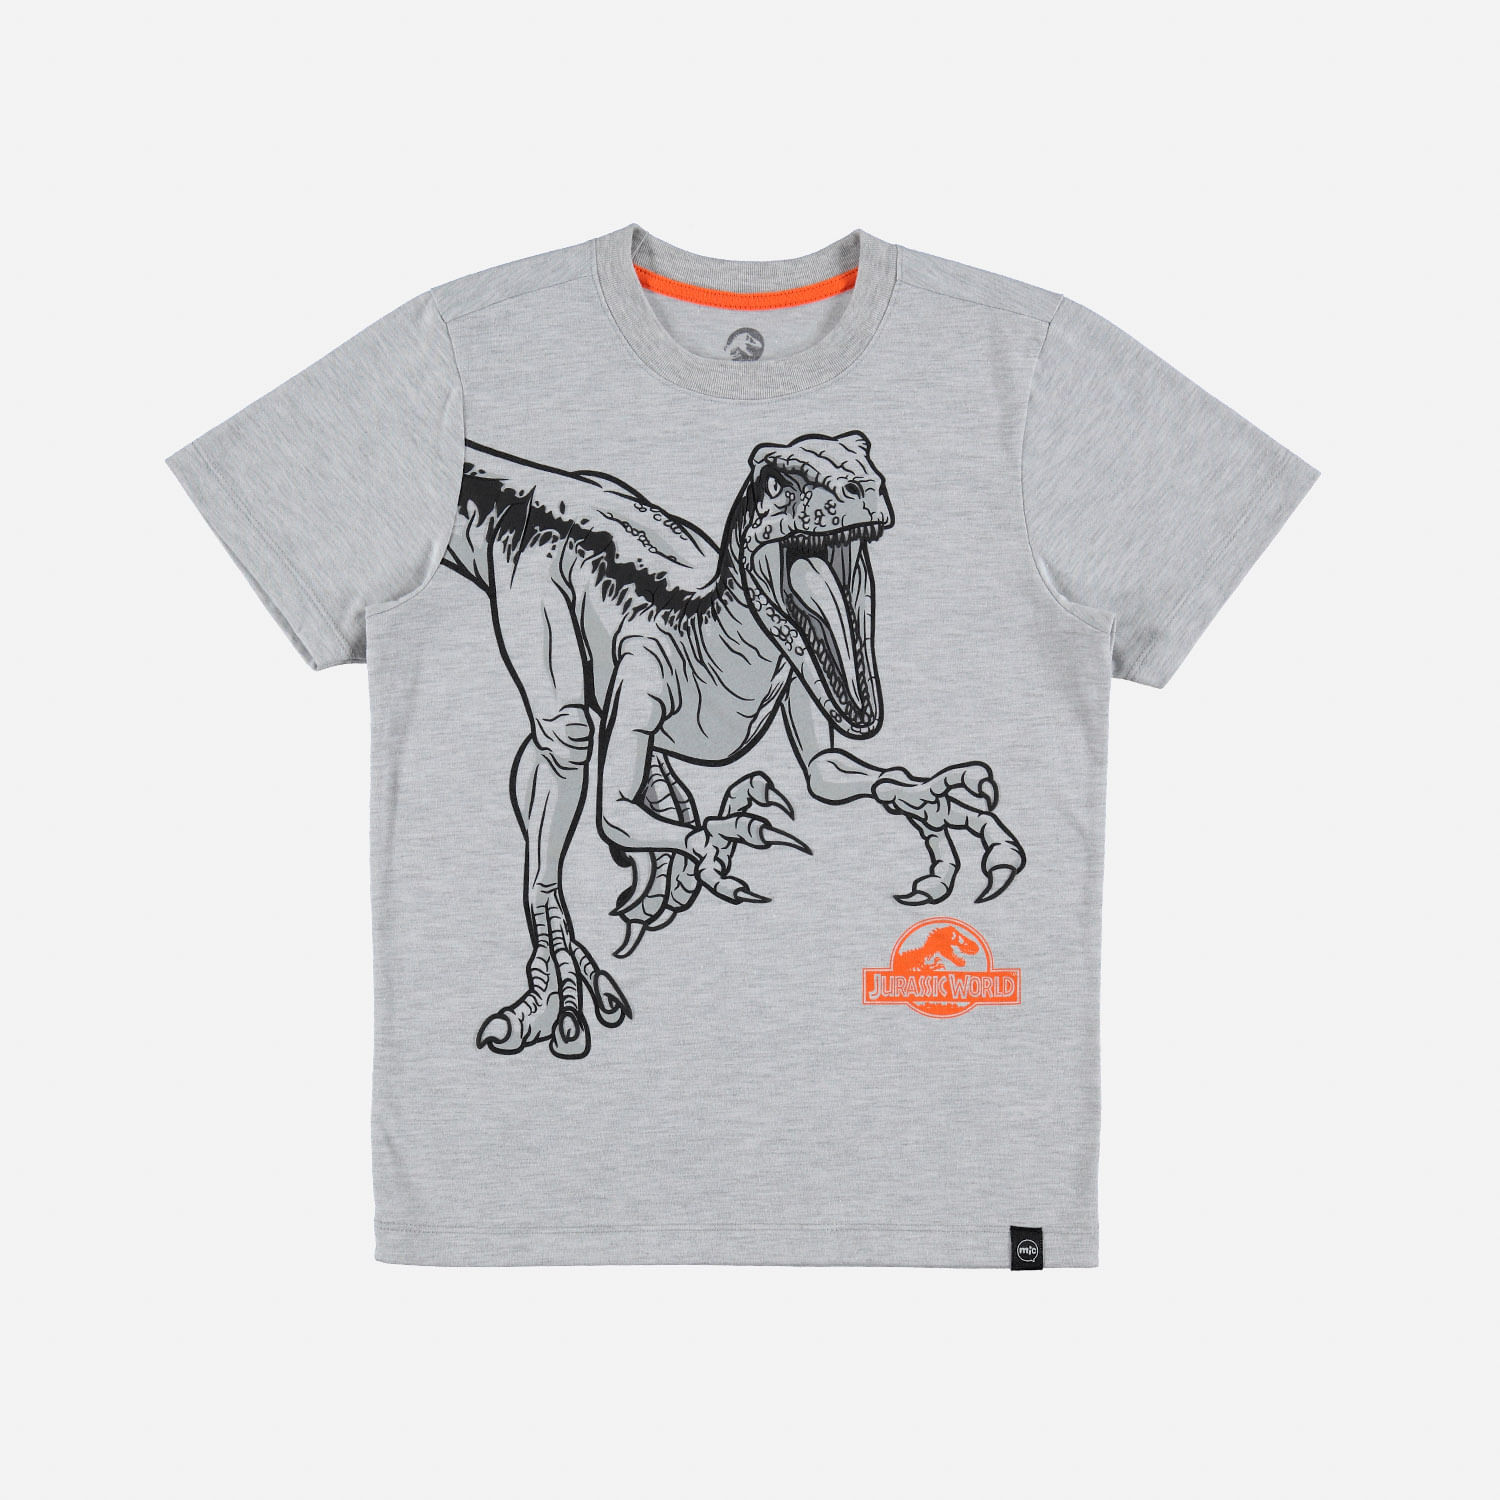 Camiseta de niño, manga corta gris de Jurassic World - Tienda Online MIC